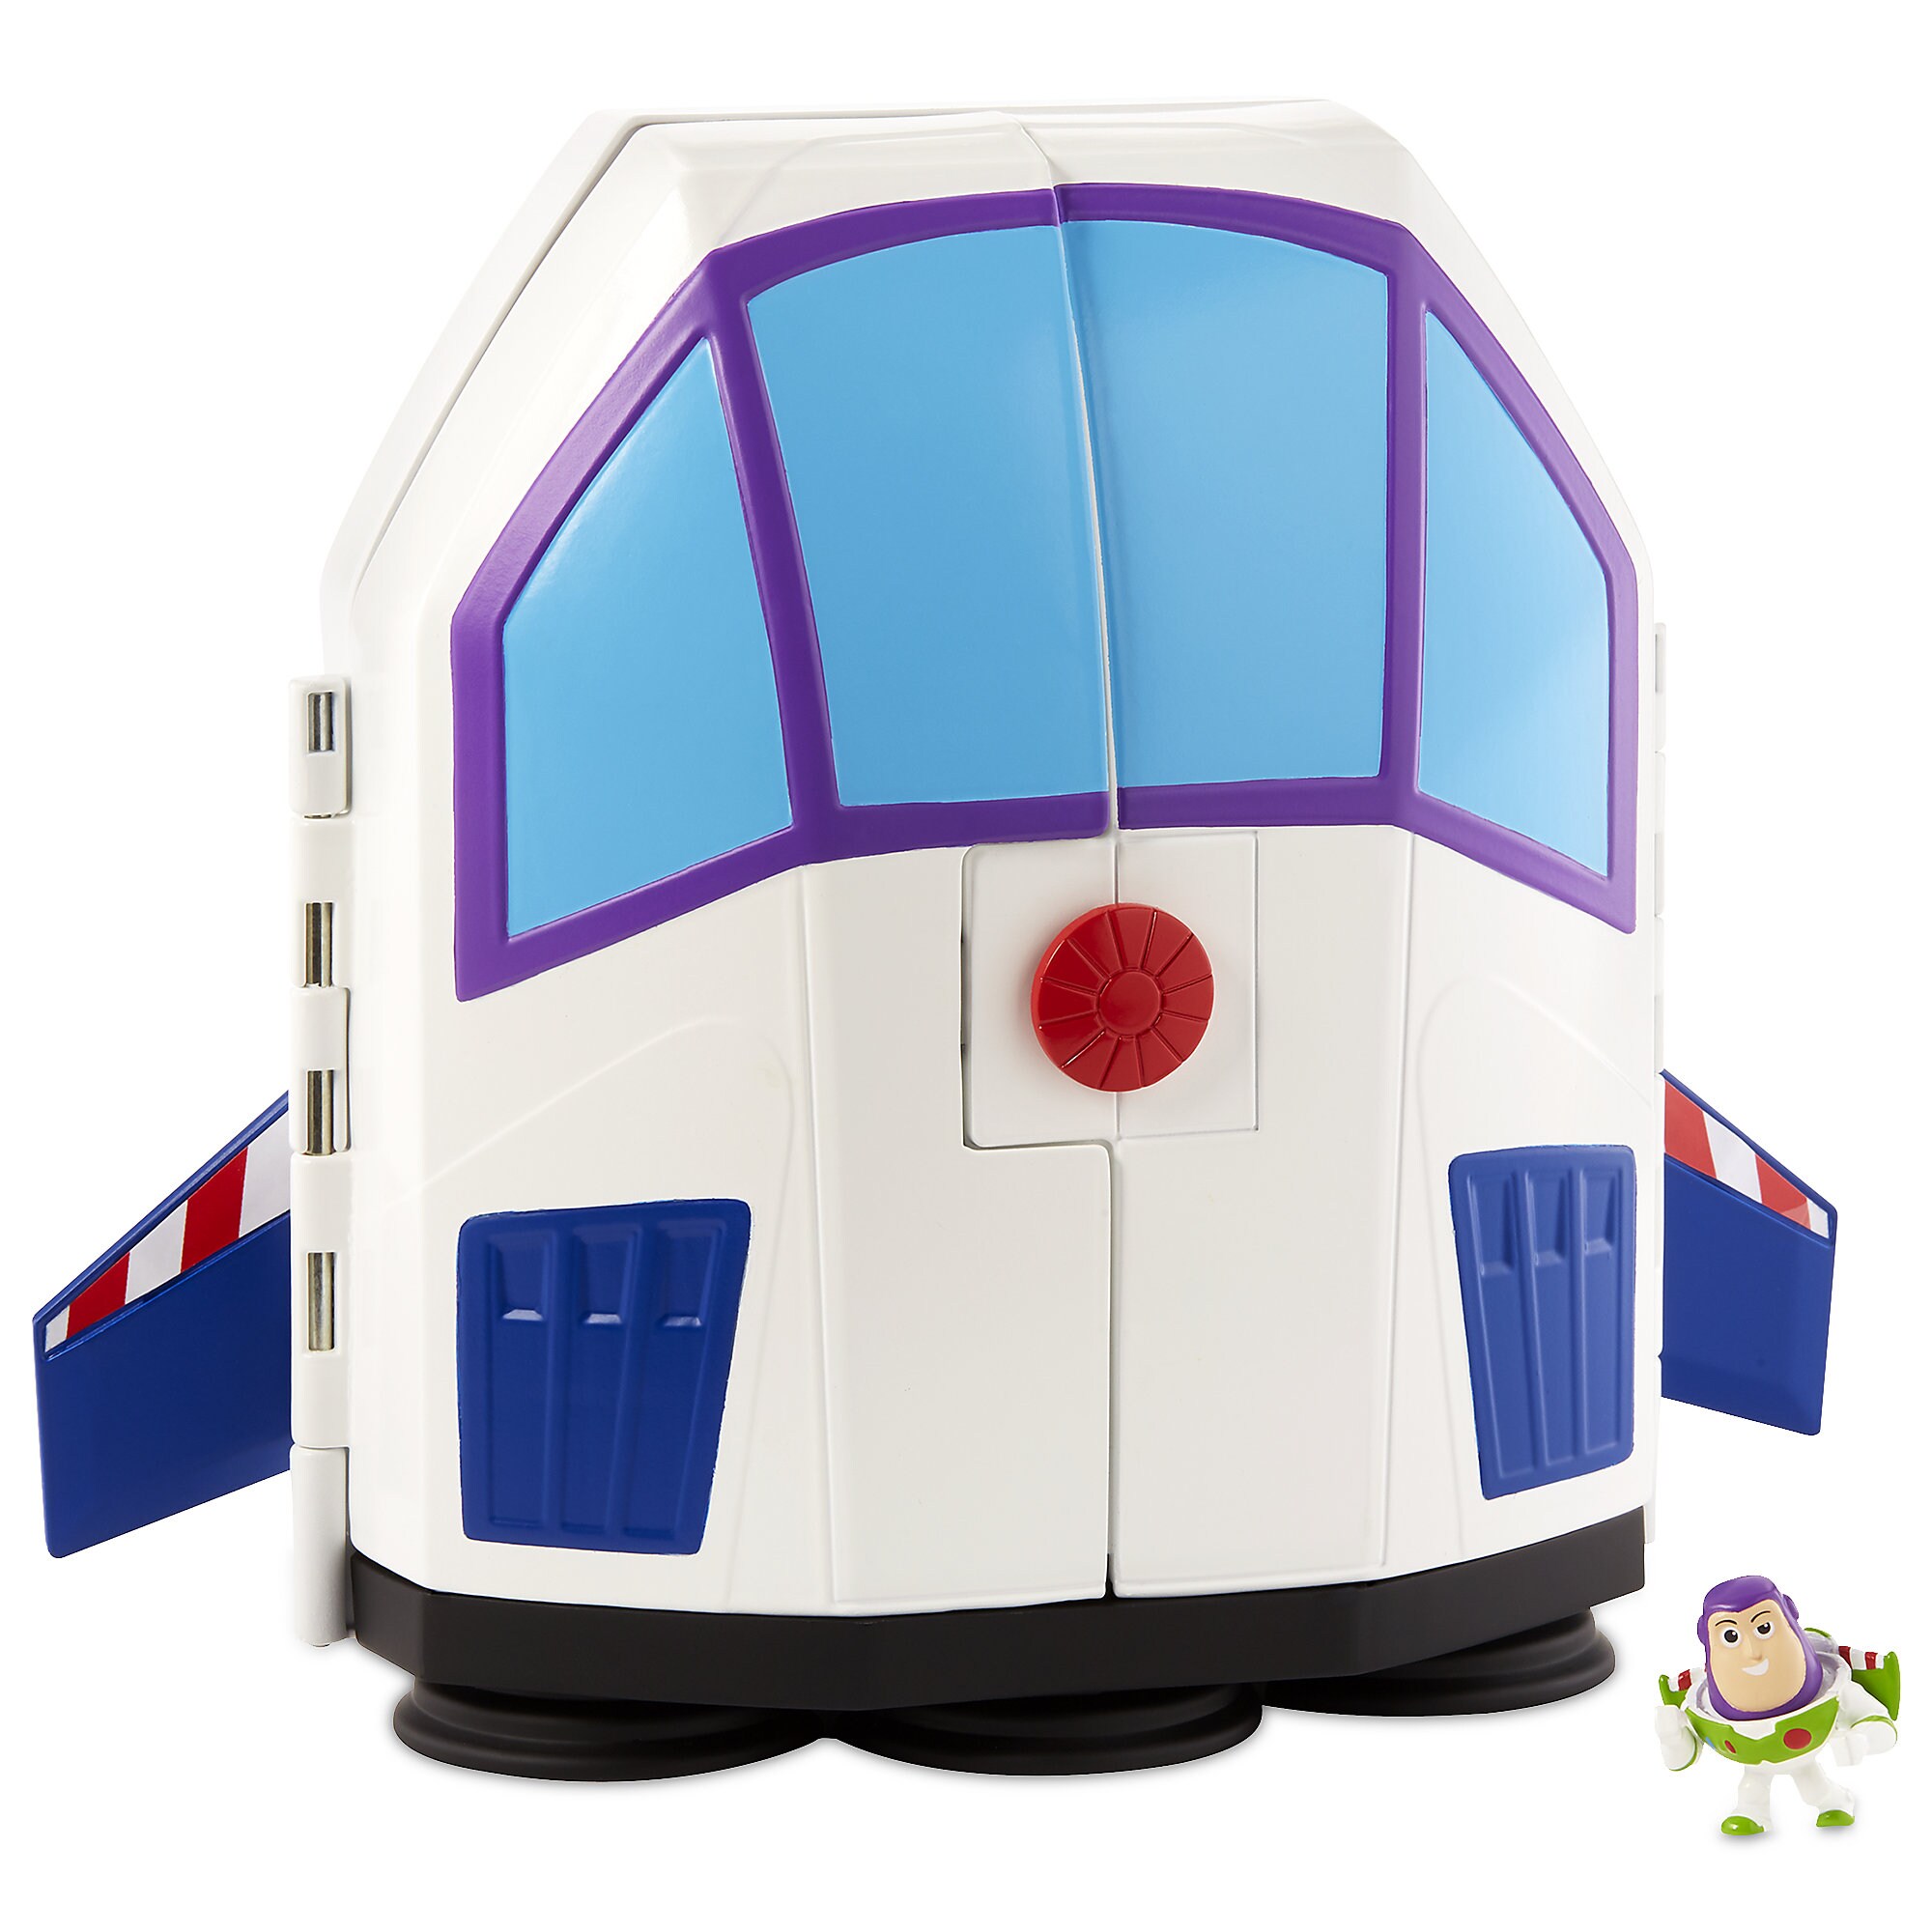 Buzz Lightyear Star Adventure Play Set - Toy Story 4